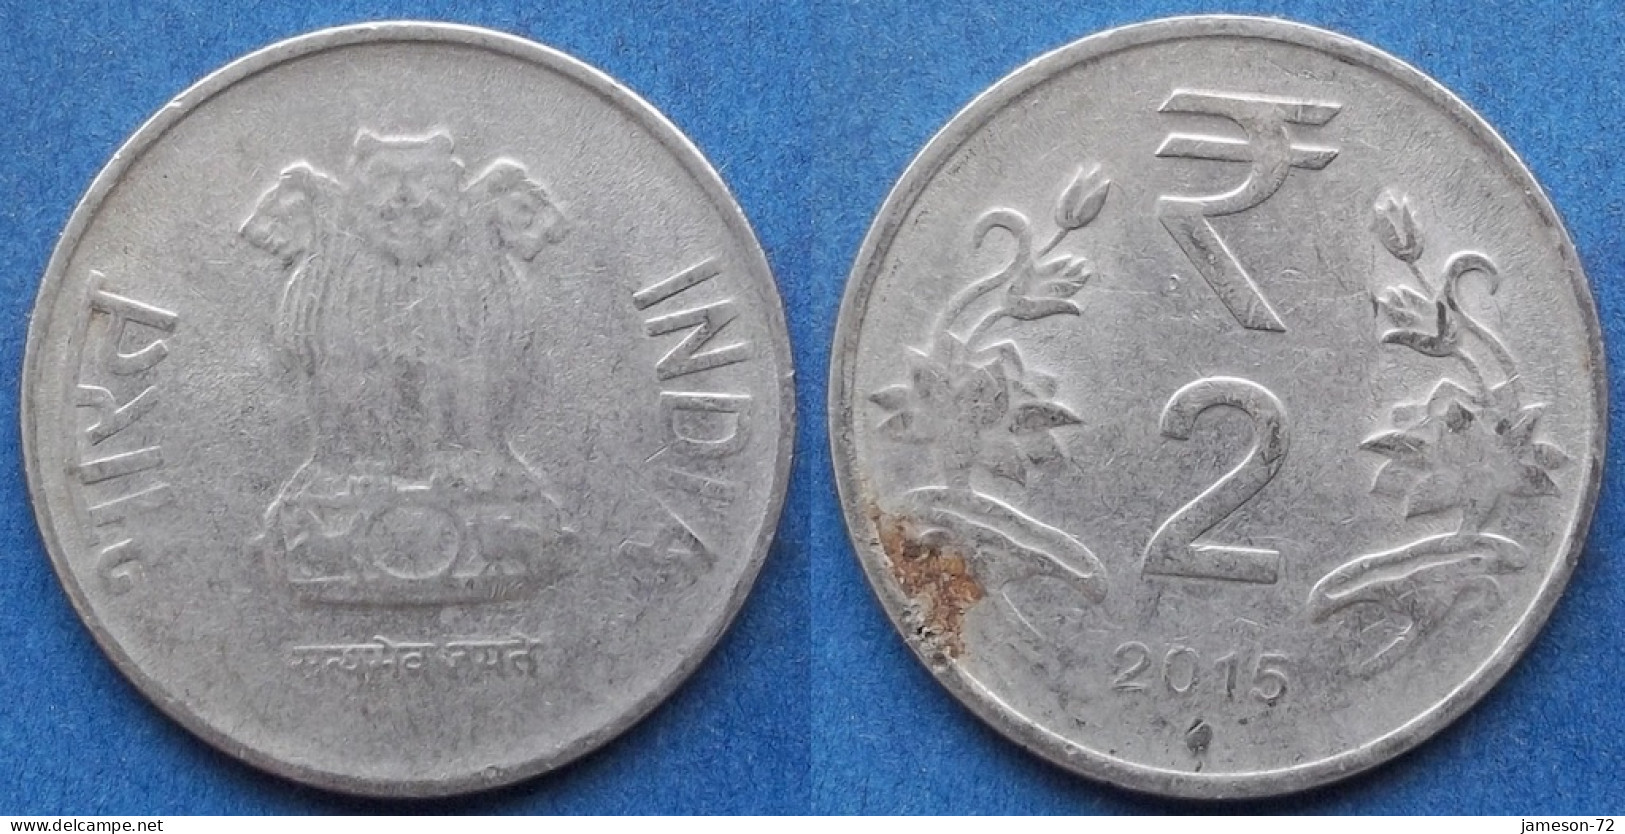 INDIA - 2 Rupees 2015 "Lotus Flowers" KM# 395 Republic Decimal Coinage (1957) - Edelweiss Coins - Géorgie